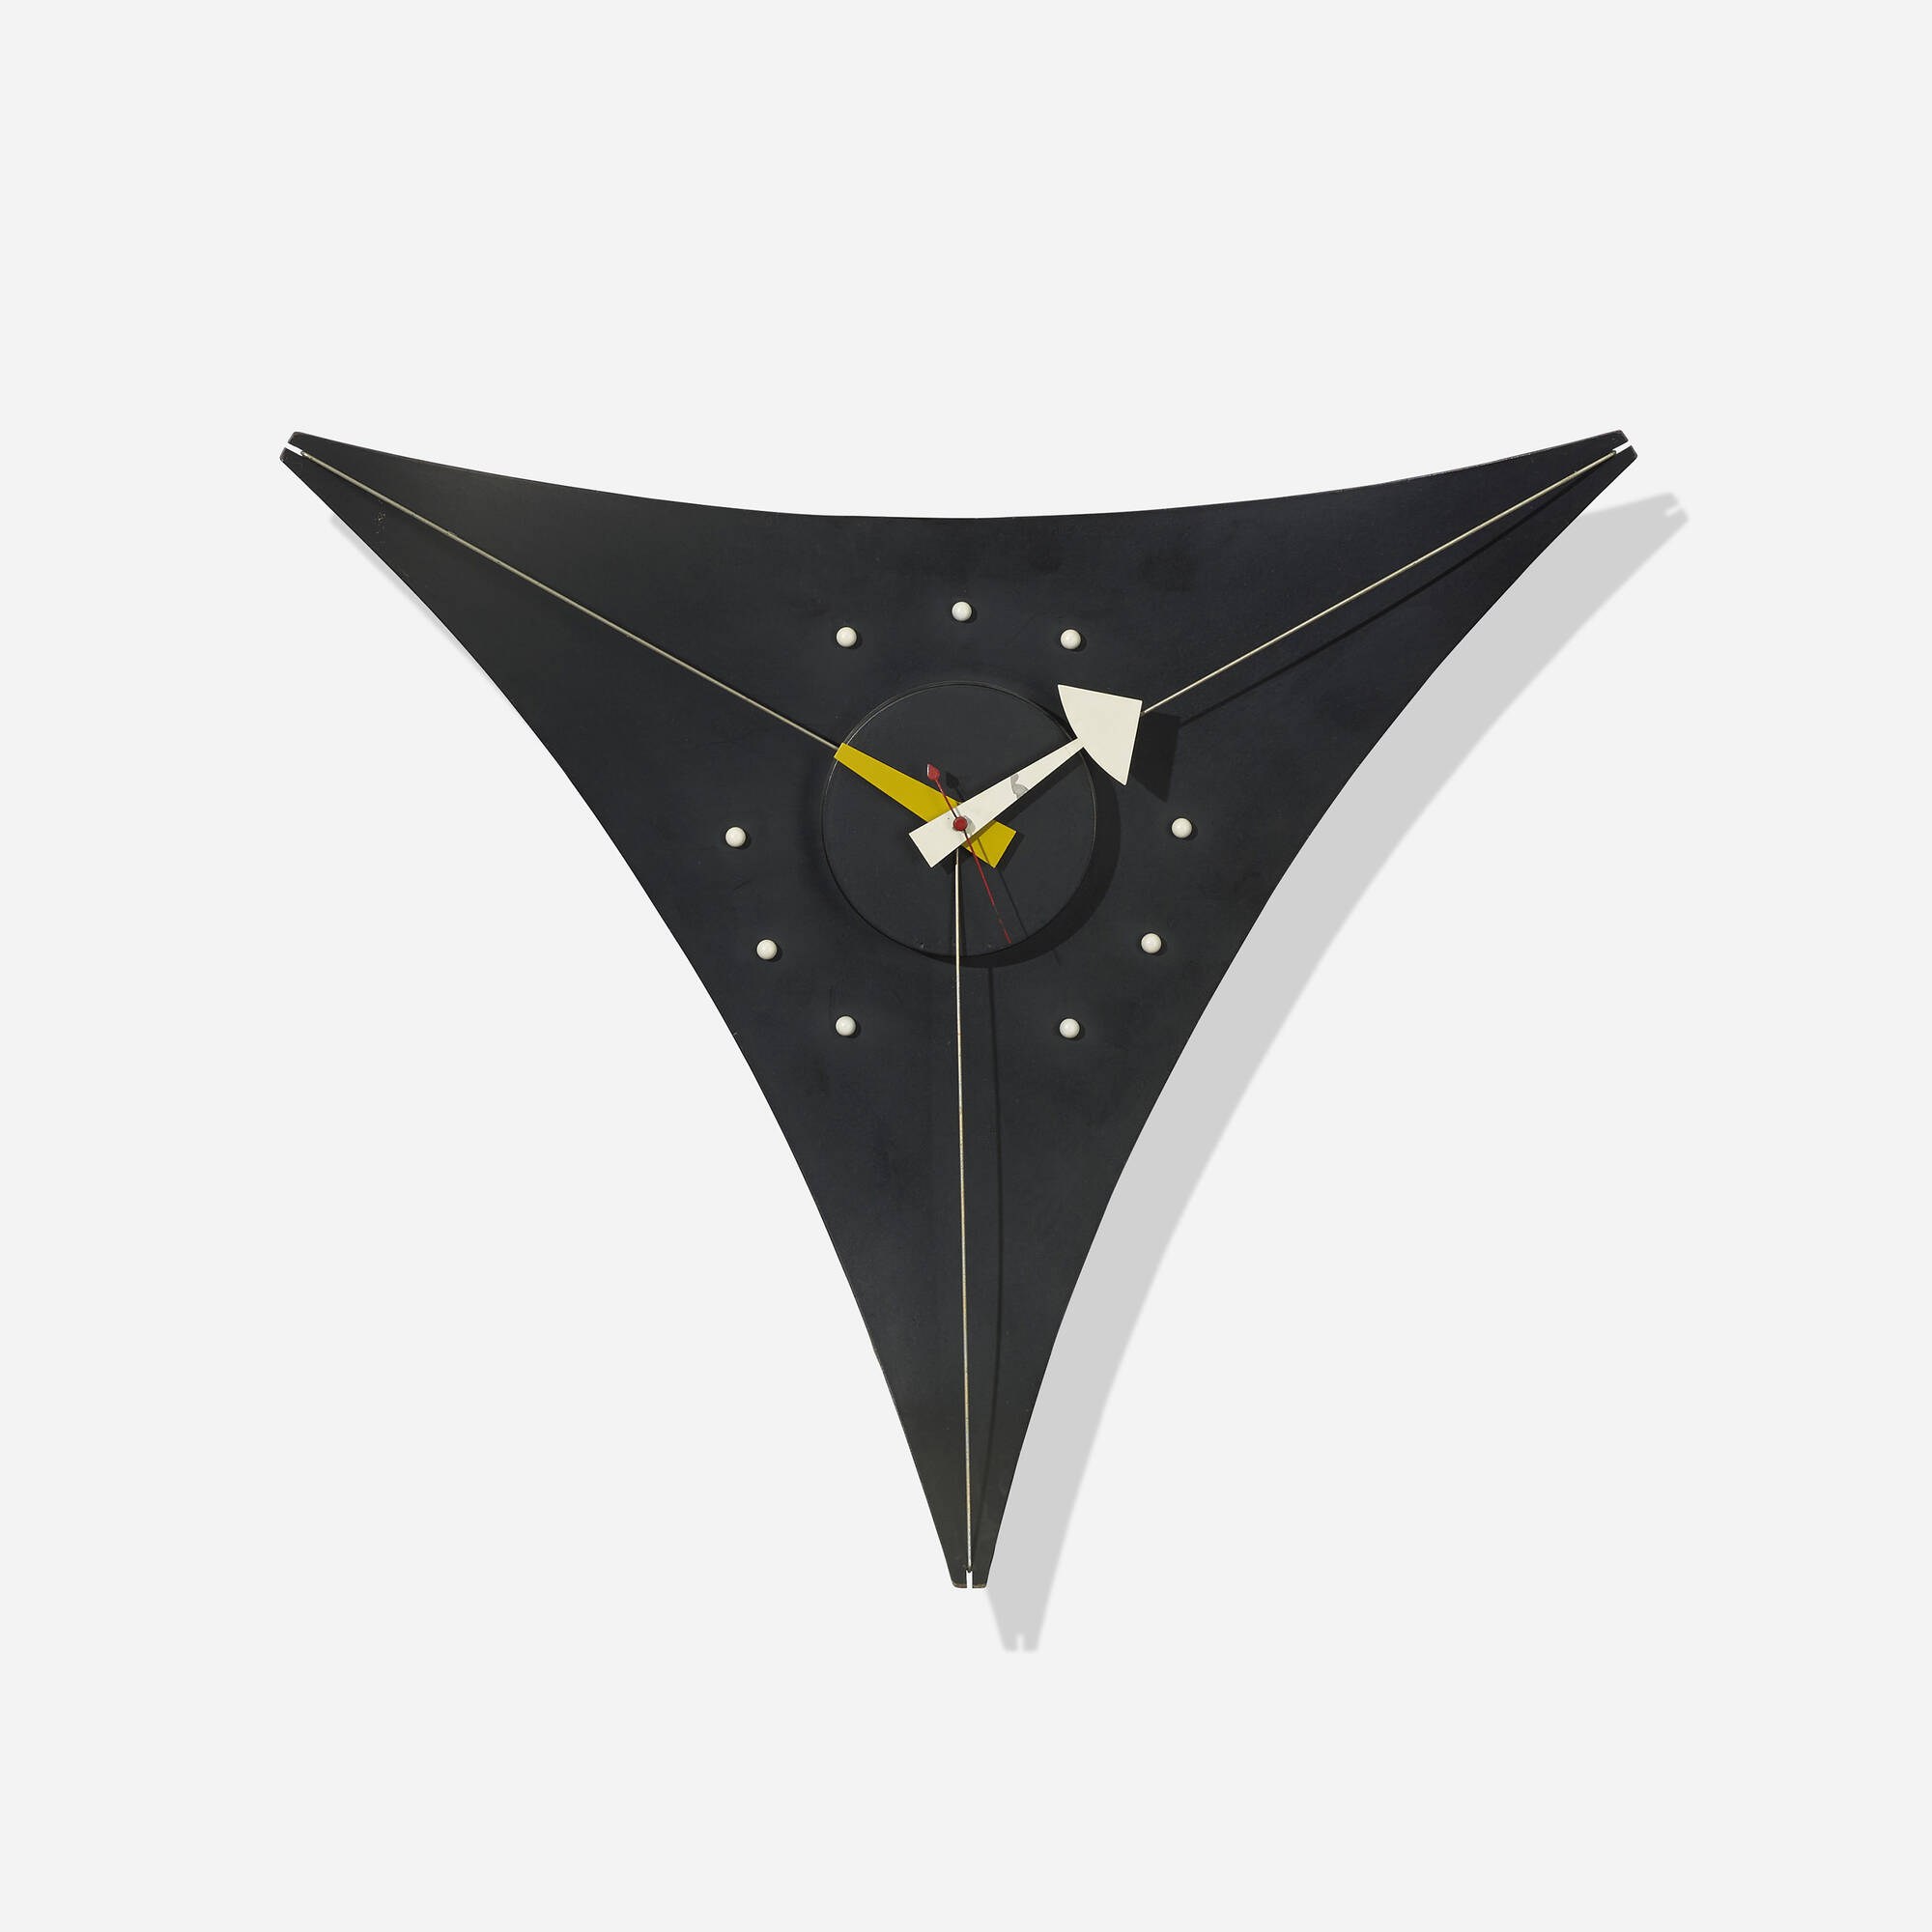 384: GEORGE NELSON & ASSOCIATES, Triangle wall clock, model 2225A